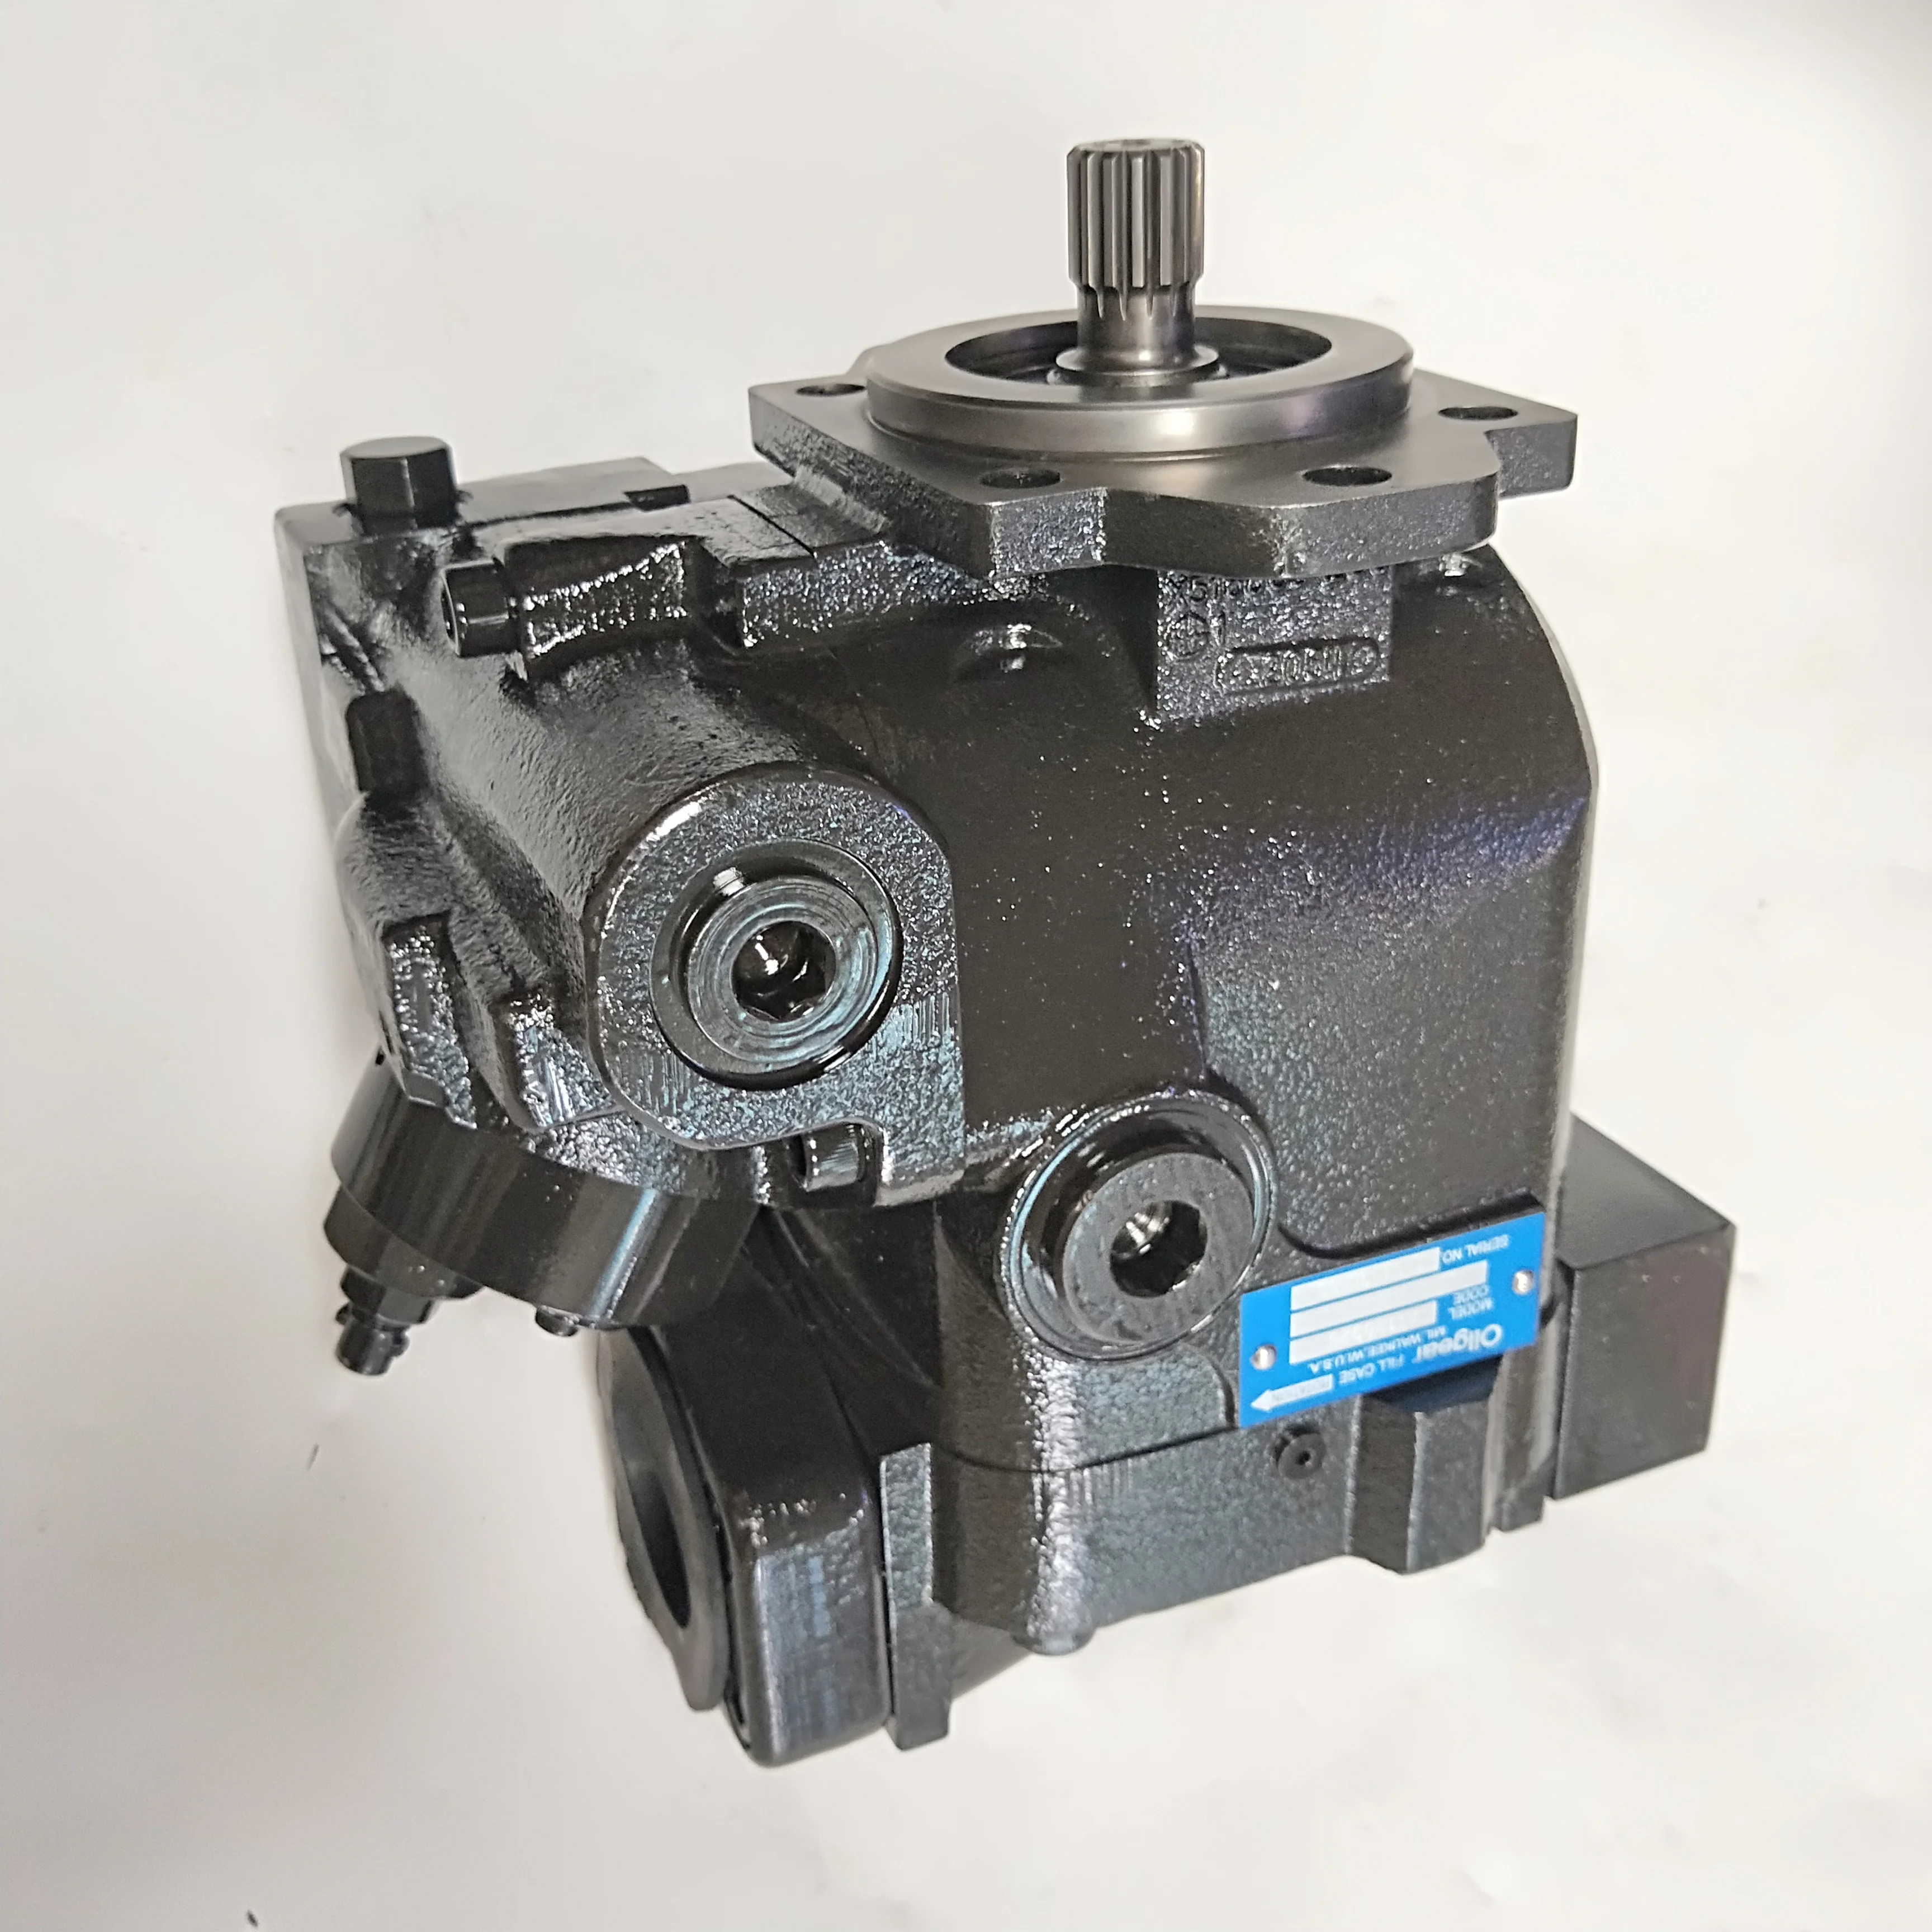 America Oilgear hydraulic piston motor pump AT197383 AT180926 AT197406 AT179588 AT184385 AT208643 AT471417 AT197406